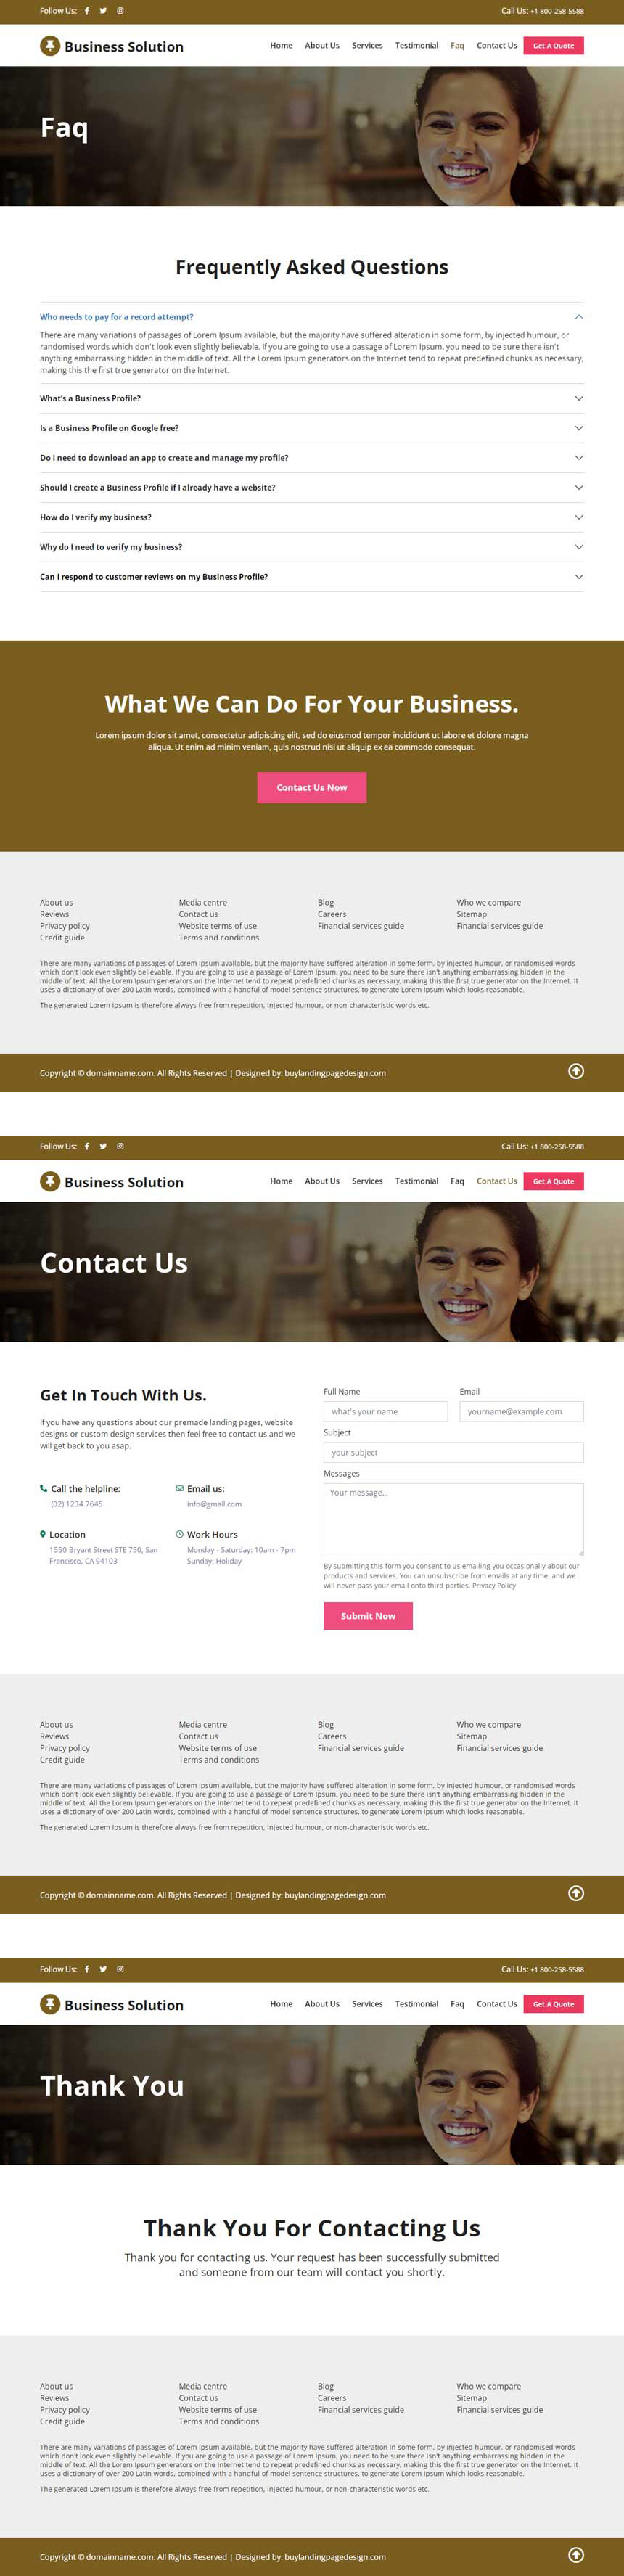 business funding solution responsive website design